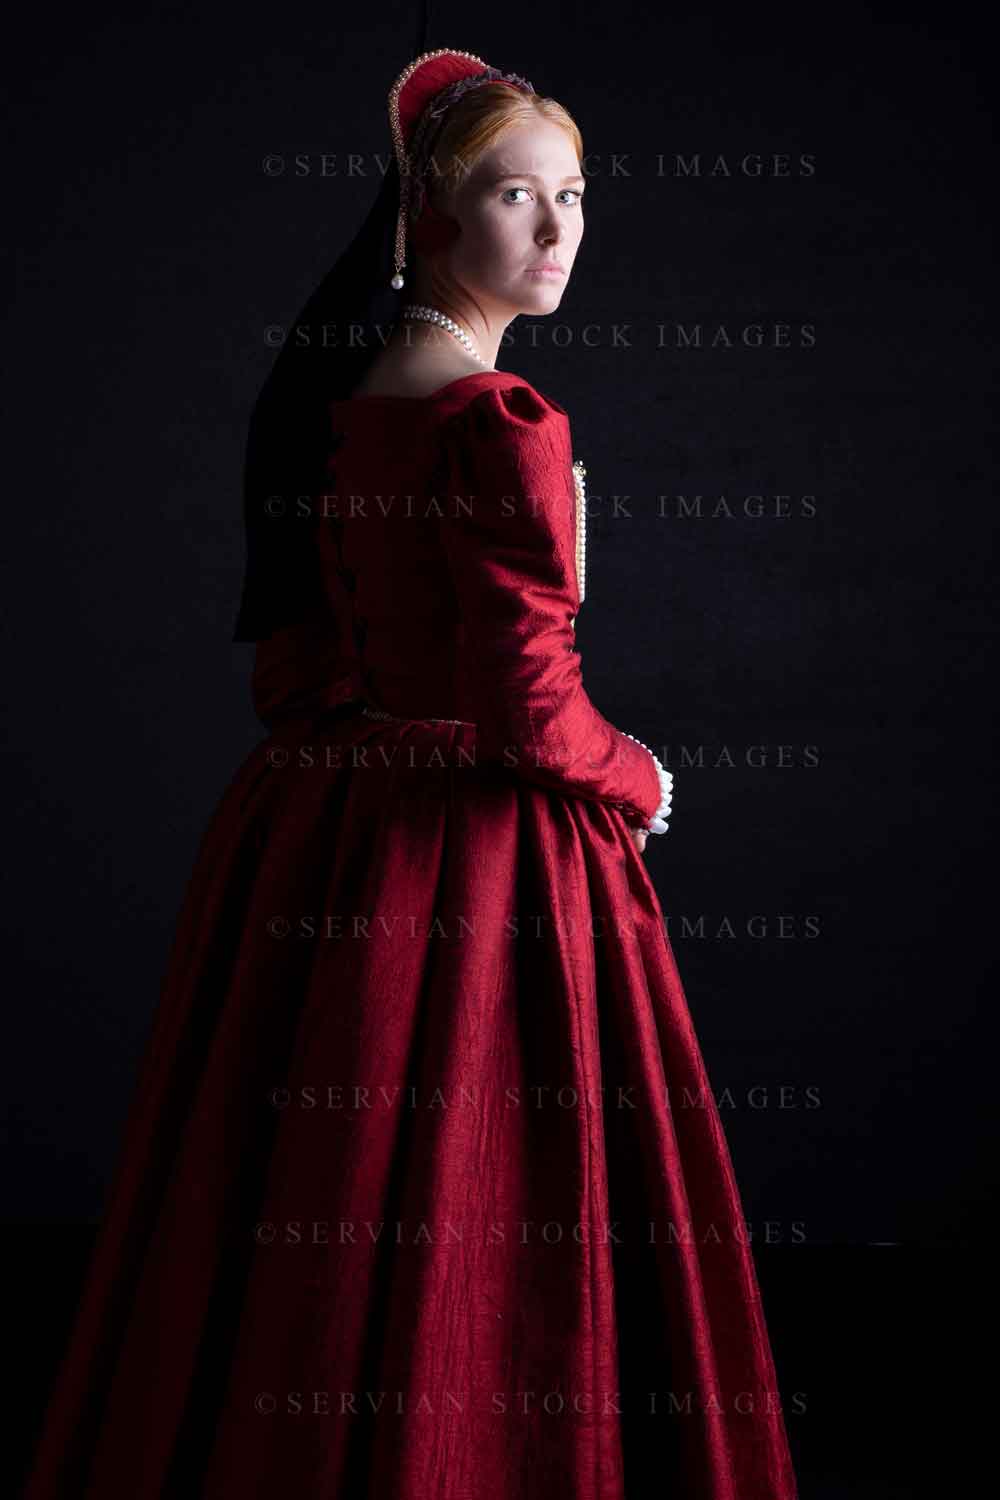 Tudor woman in an ornate red dress  (Lauren 0254)